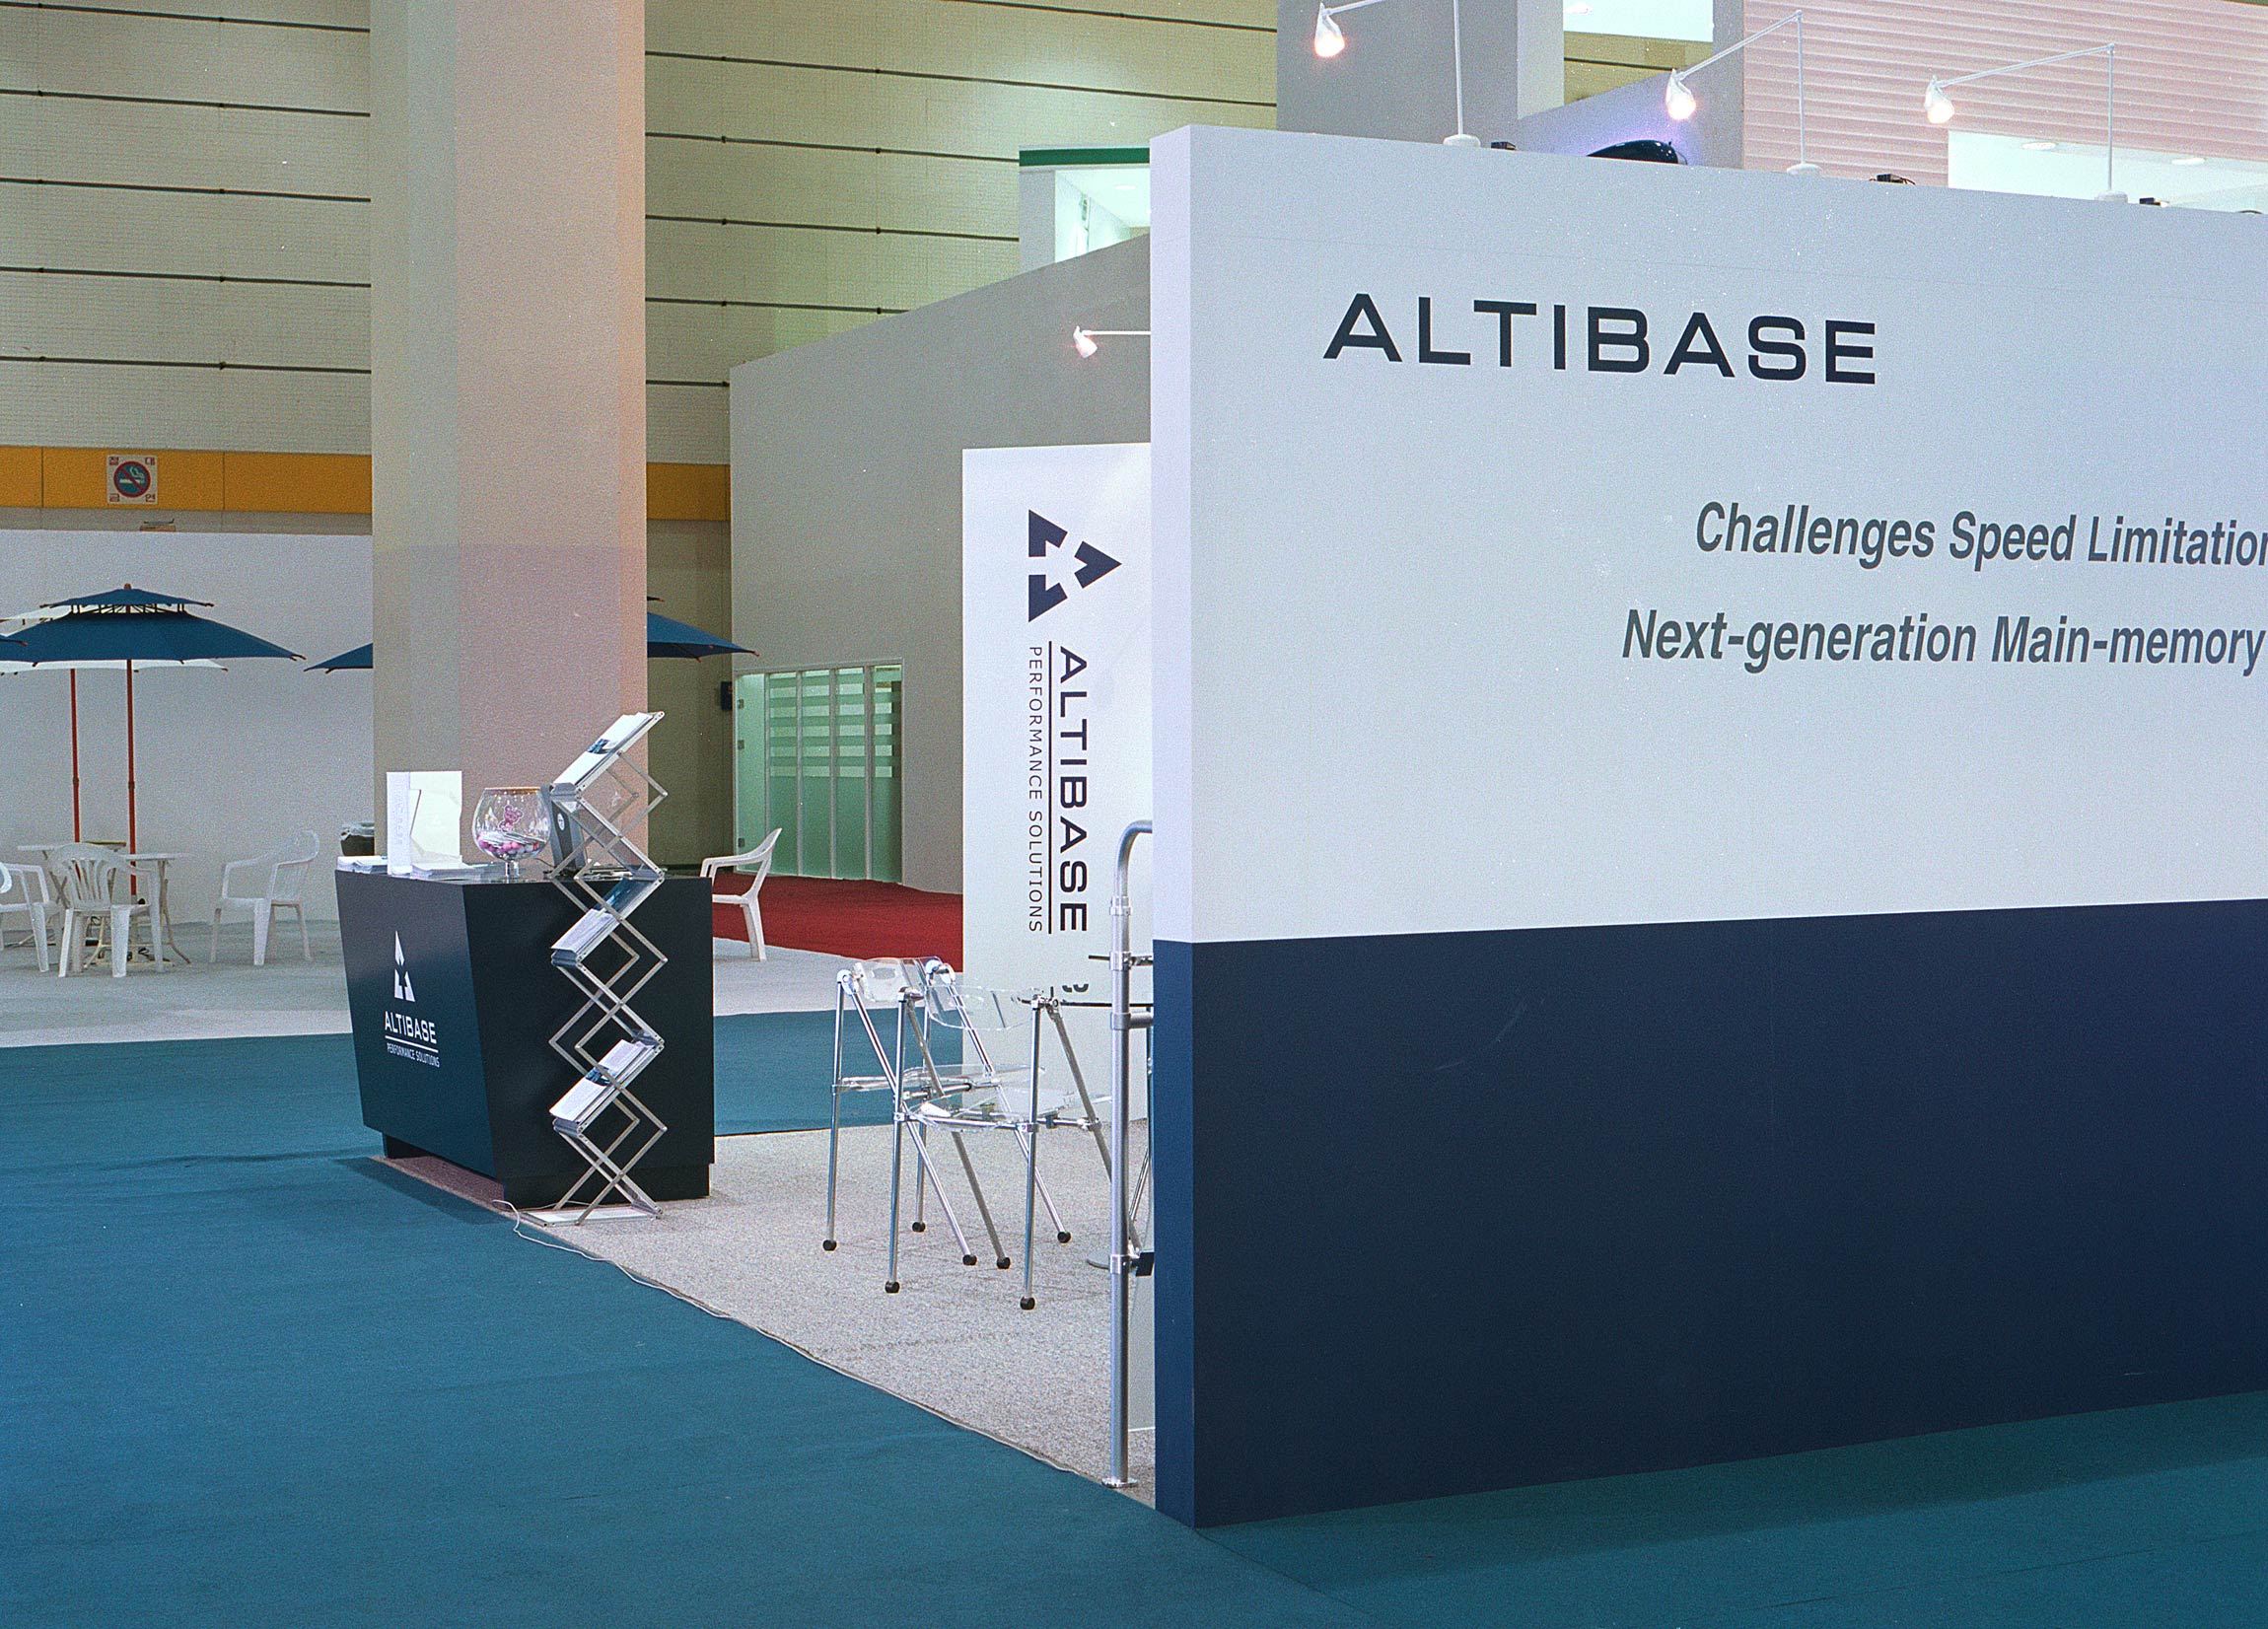 Altibase at ITU Telecom Altibase Exibition & Environmental altibase-booth-04.jpg